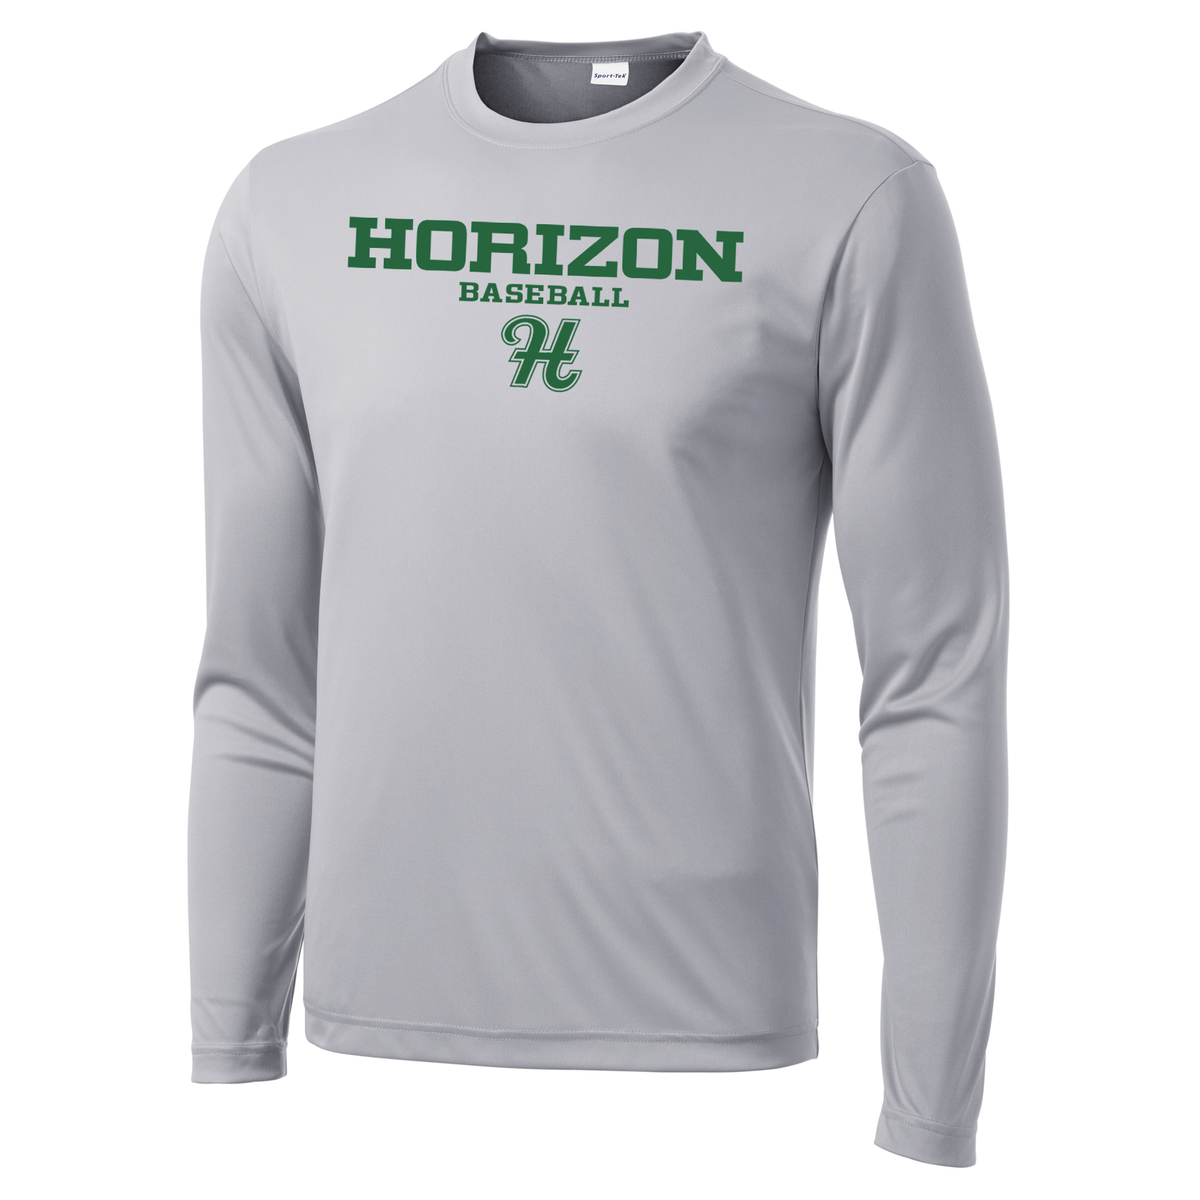 Horizon Baseball Long Sleeve Performance Shirt